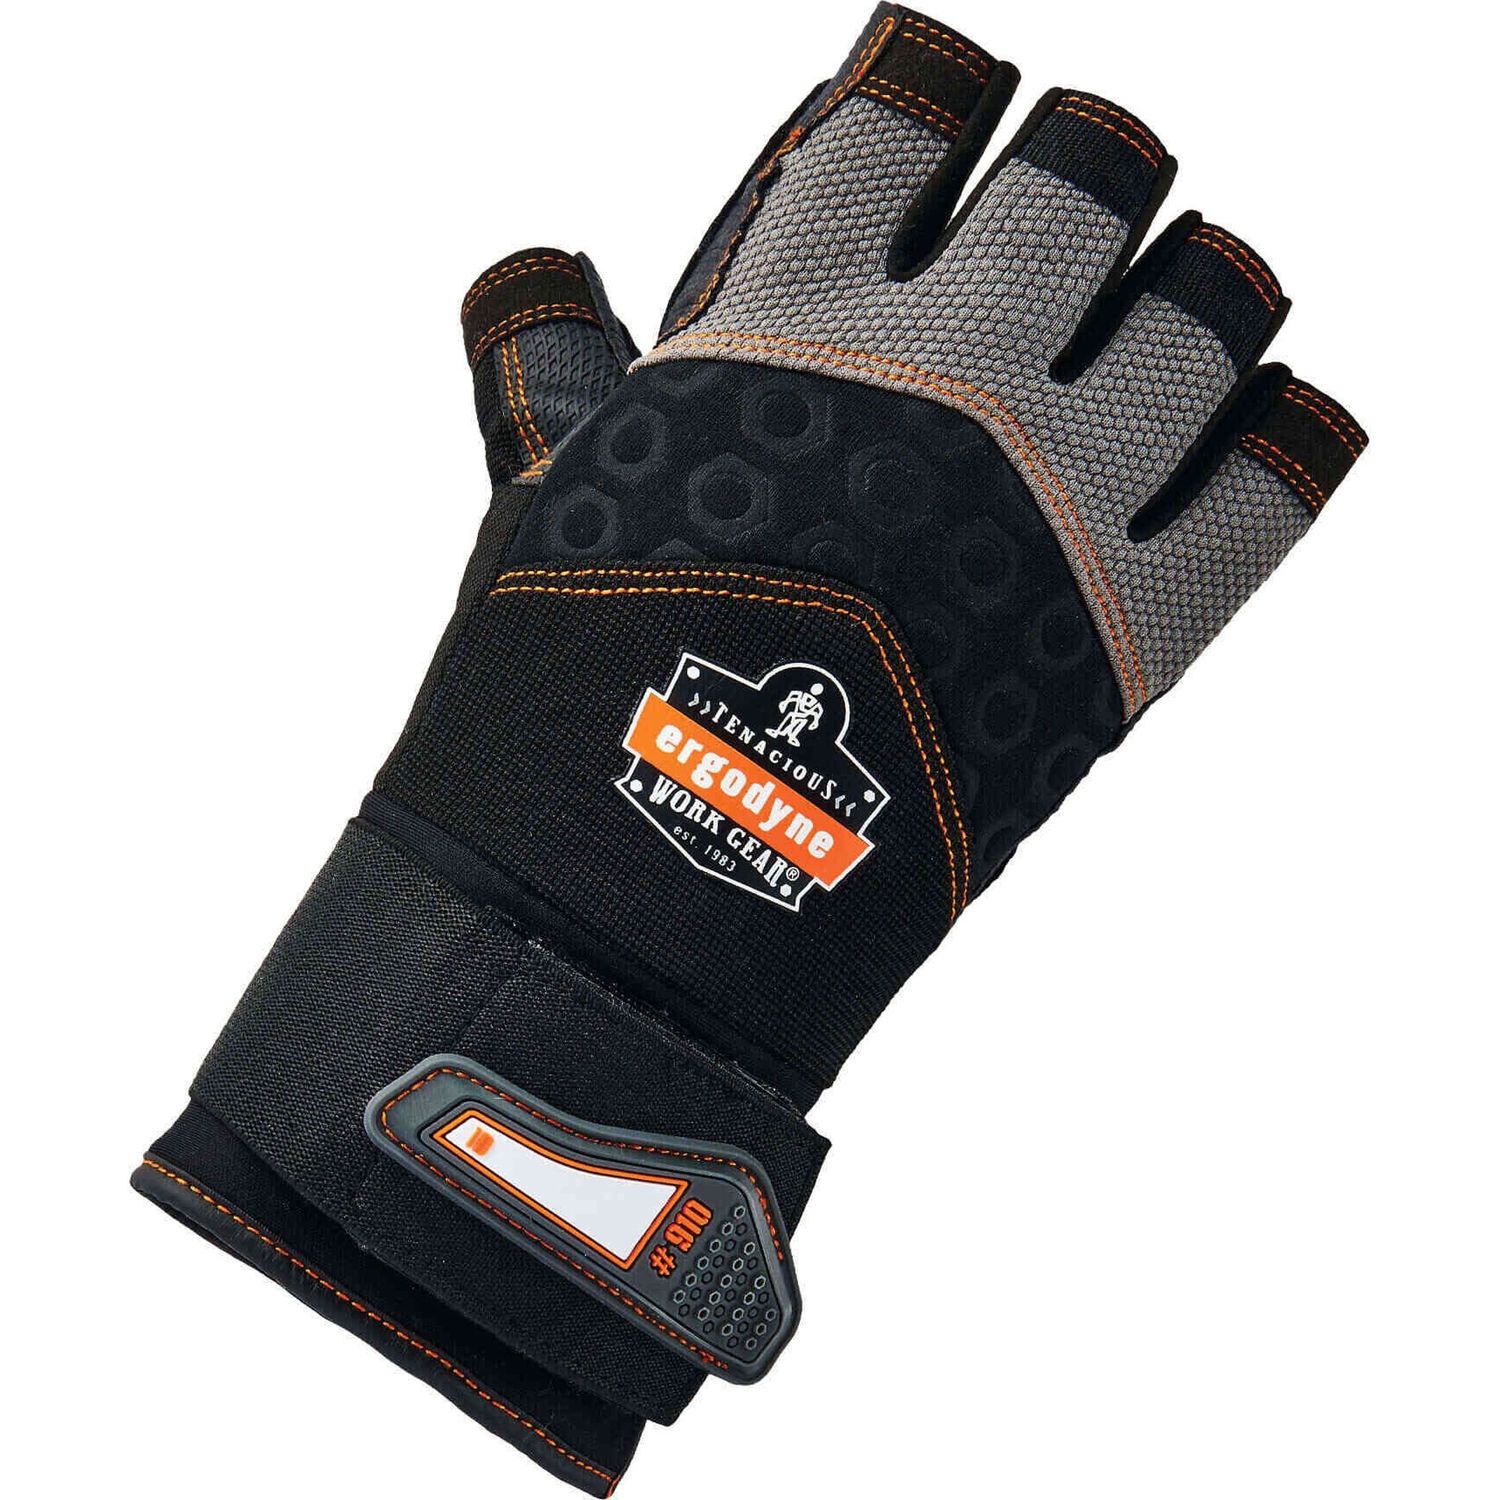 910 Half-Finger Impact Gloves + Wrist Support Extra Large Size, Neoprene Knuckle Pad, Spandex, Black